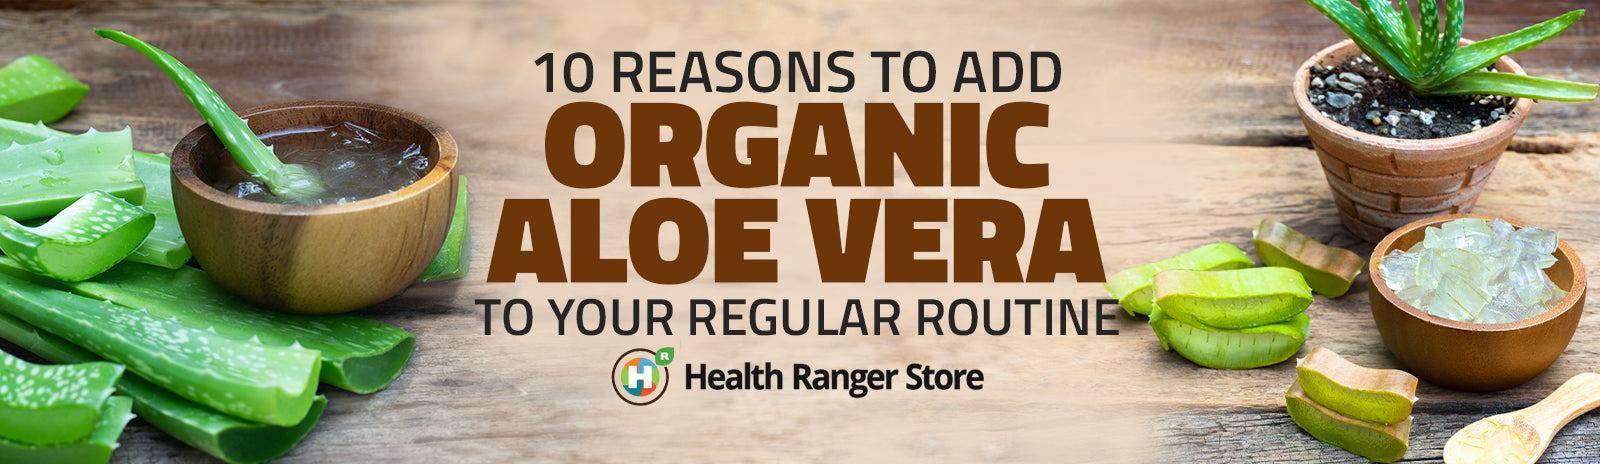 Top 10 reasons to add organic Aloe vera to your regular diet